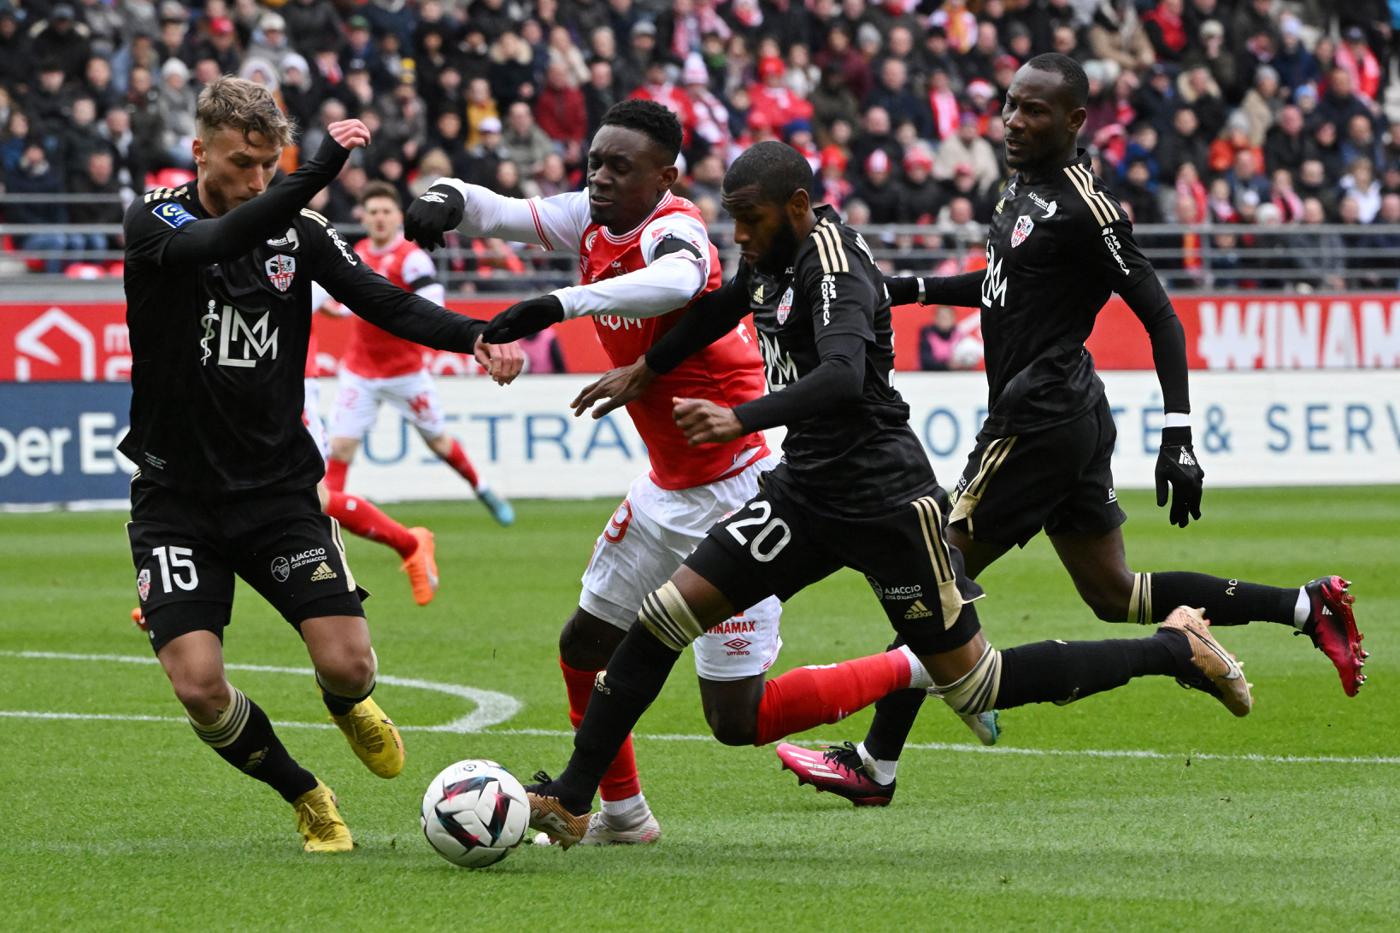 Reims - Ajaccio - 1:0. French Premier League, round 26. Match review, statistics.